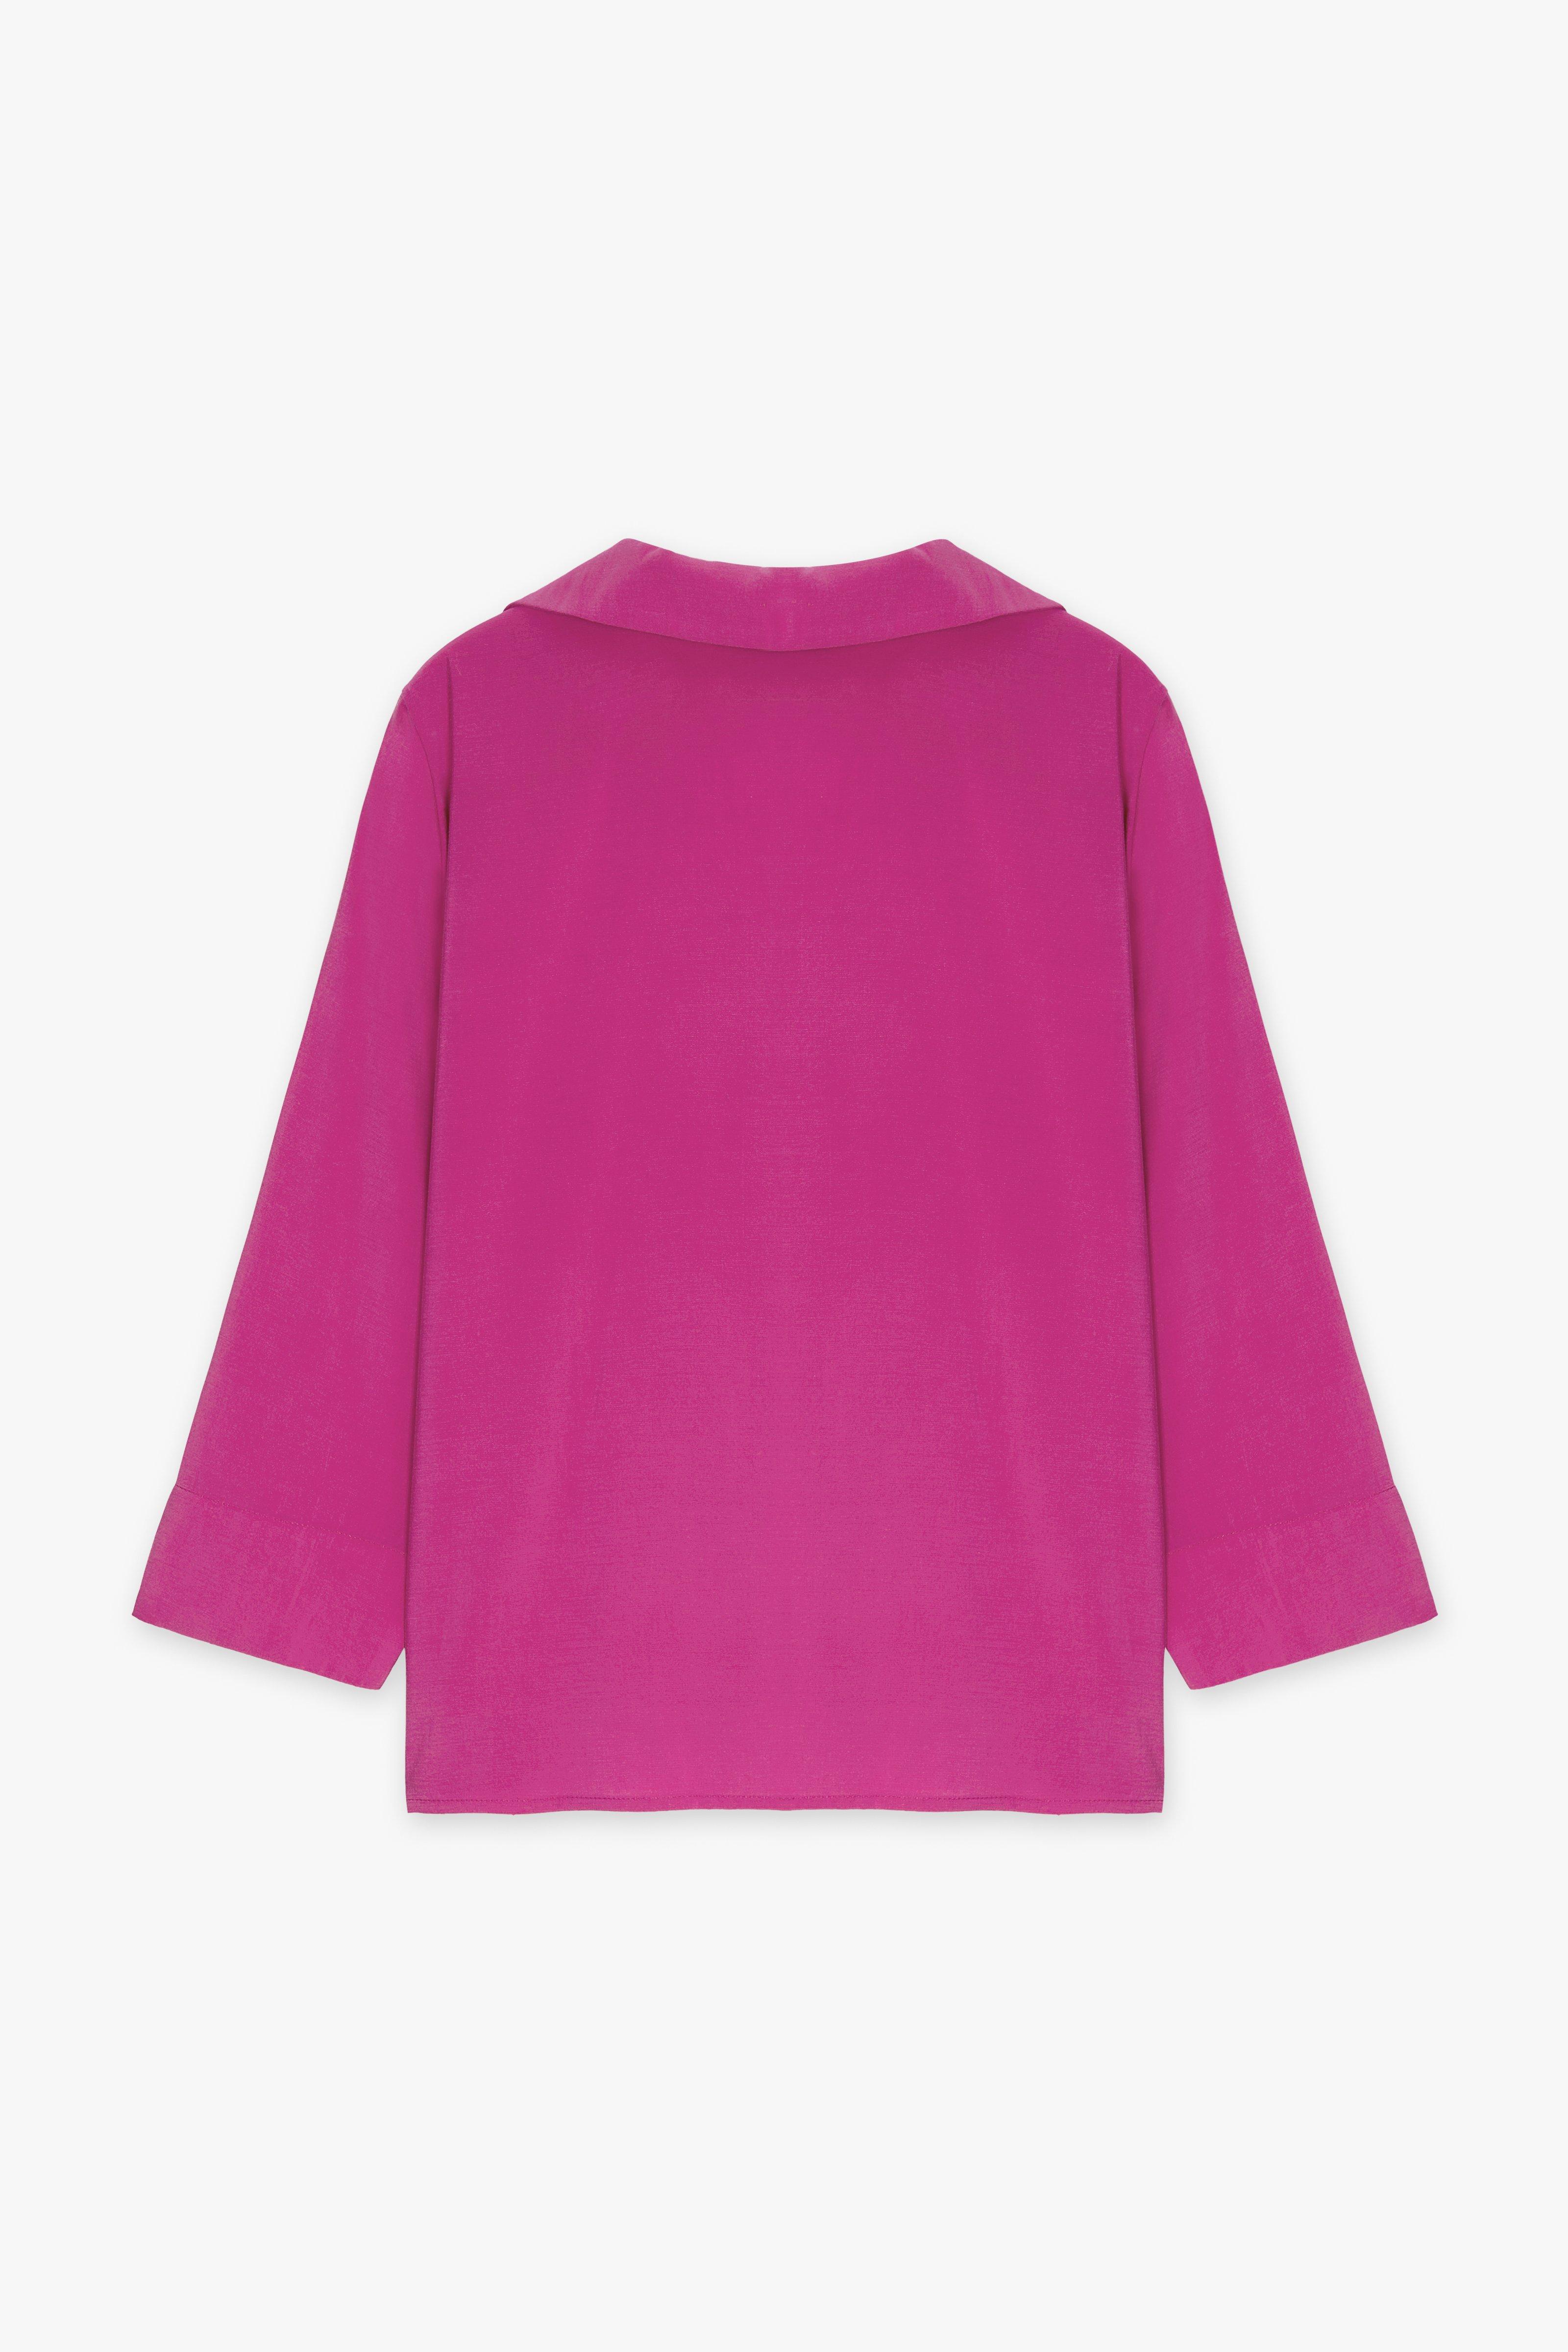 CKS Dames - SOLEDO - blouse short sleeves - pink